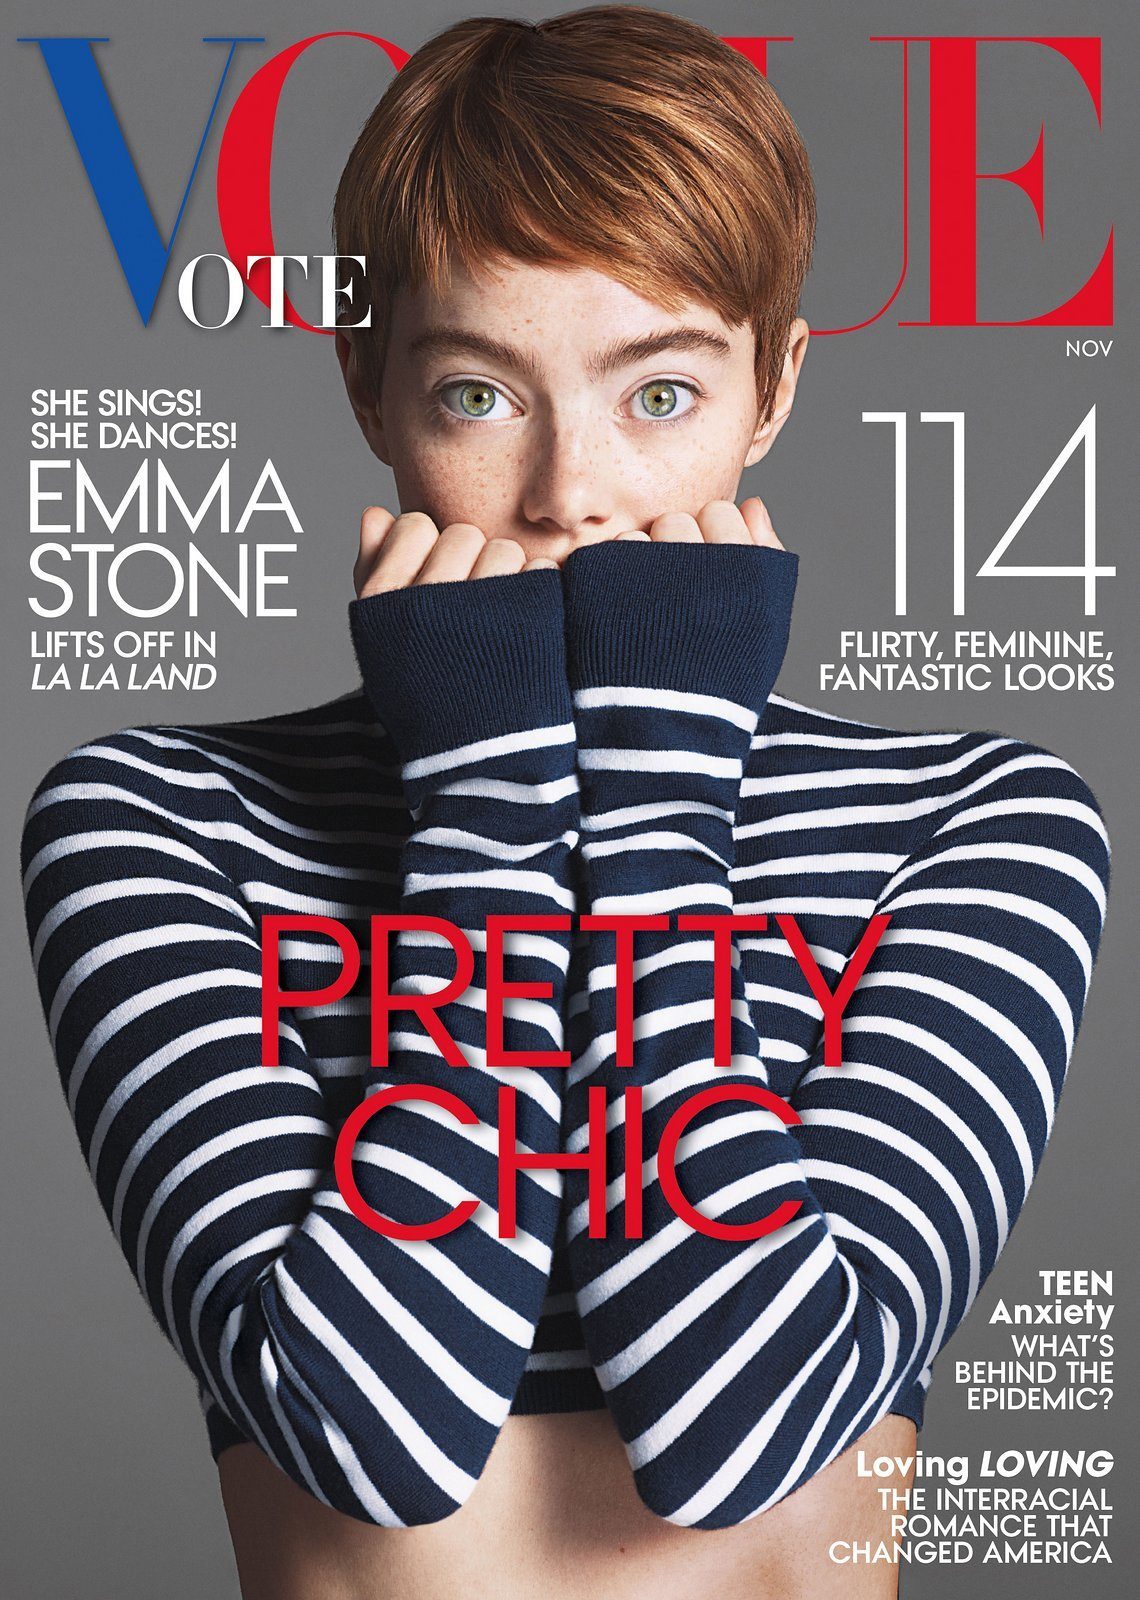 Emma Stone 的各種可能：俏皮、性感、知性多變造型登《VOGUE》封面 9